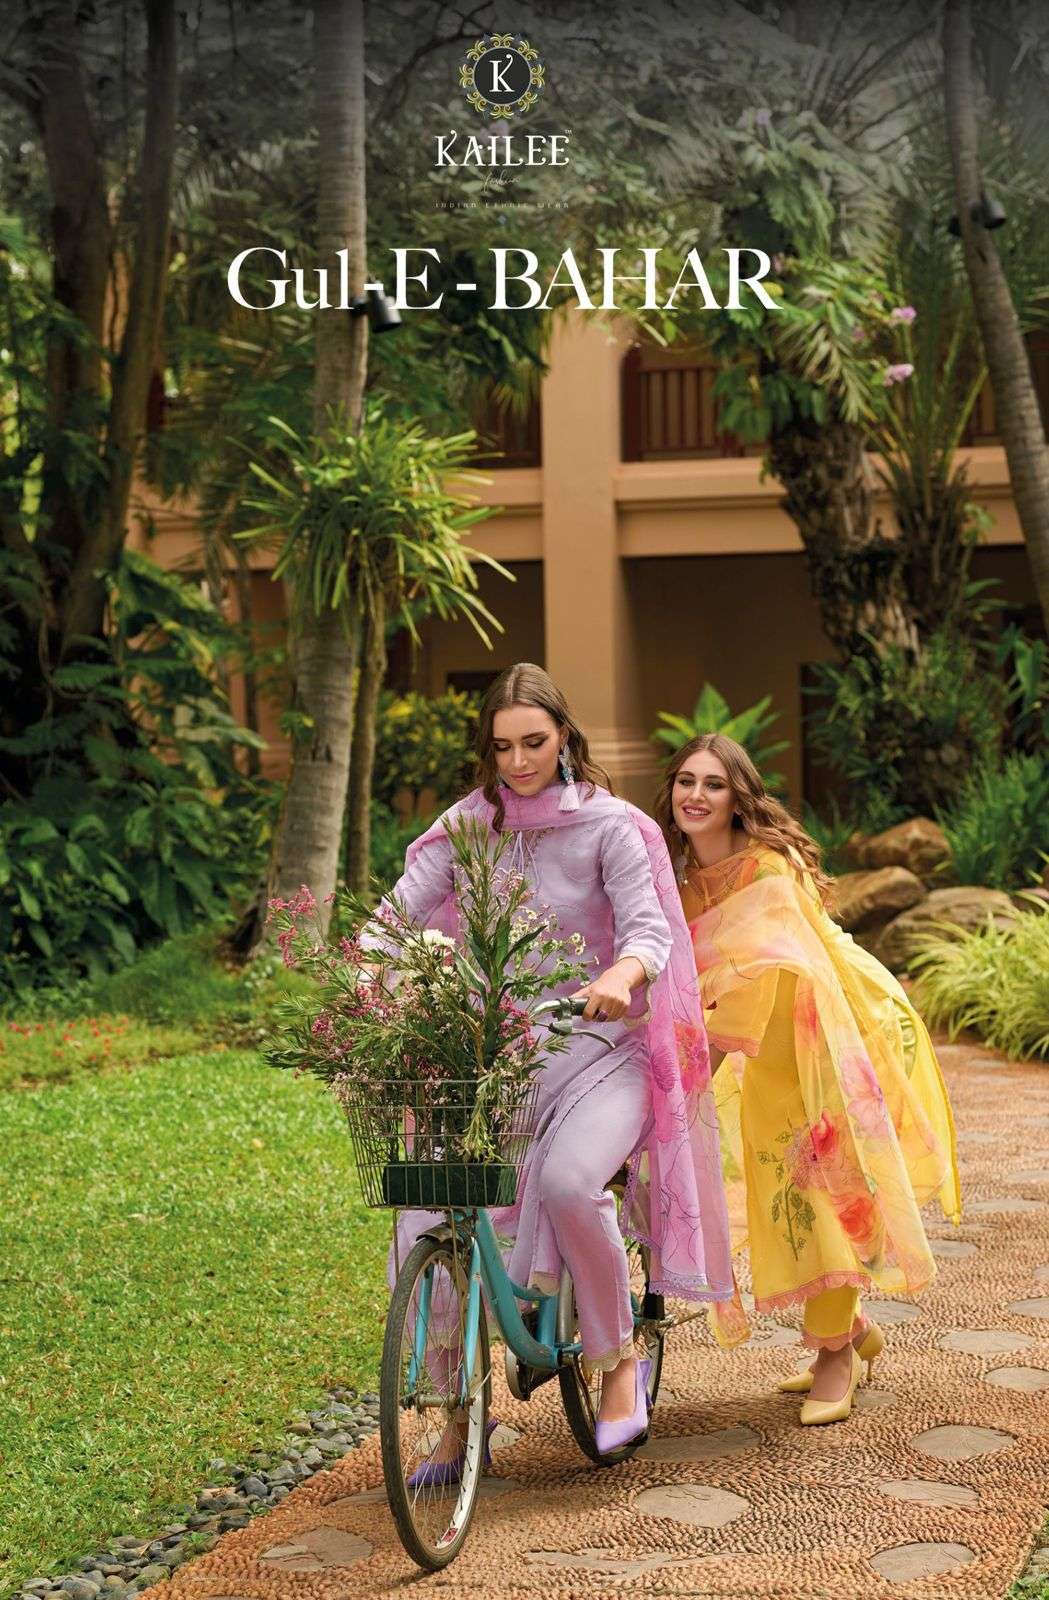 KAILEE FASHION GUL-E-BAHAR Kurti Wholesale catalog